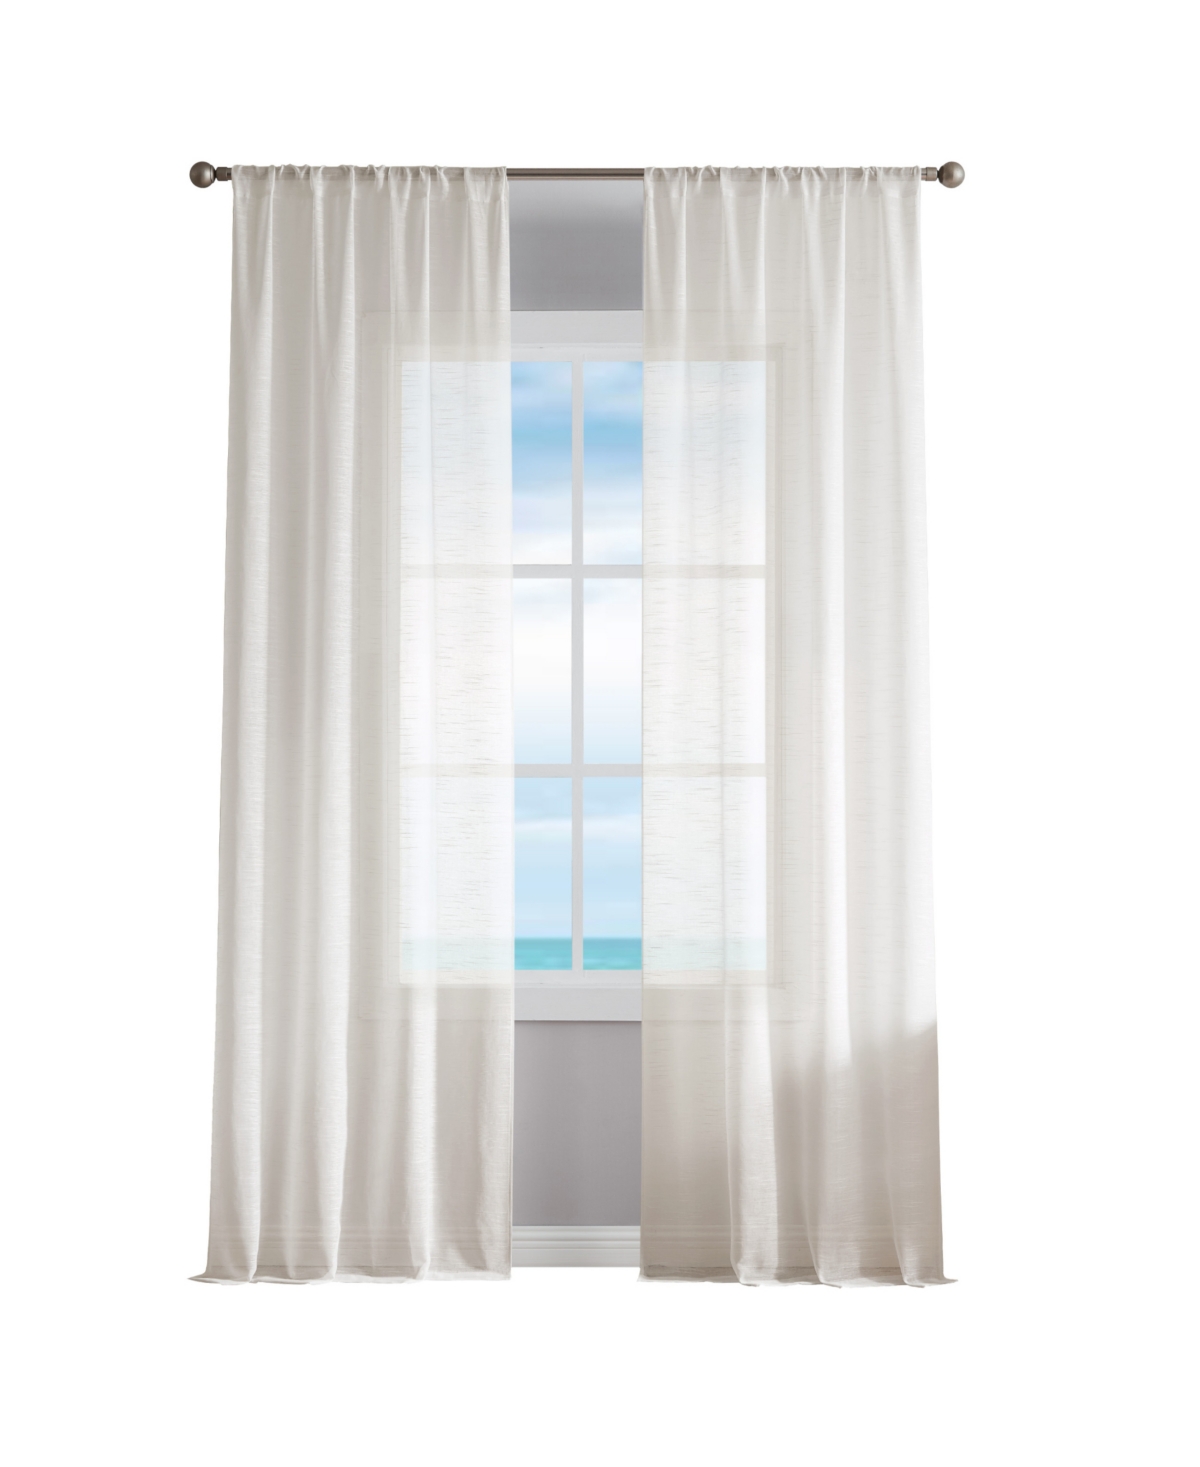 Erasmus Sheer Rod Pocket Window Curtain Panel Pair, 38" x 108" - Gray